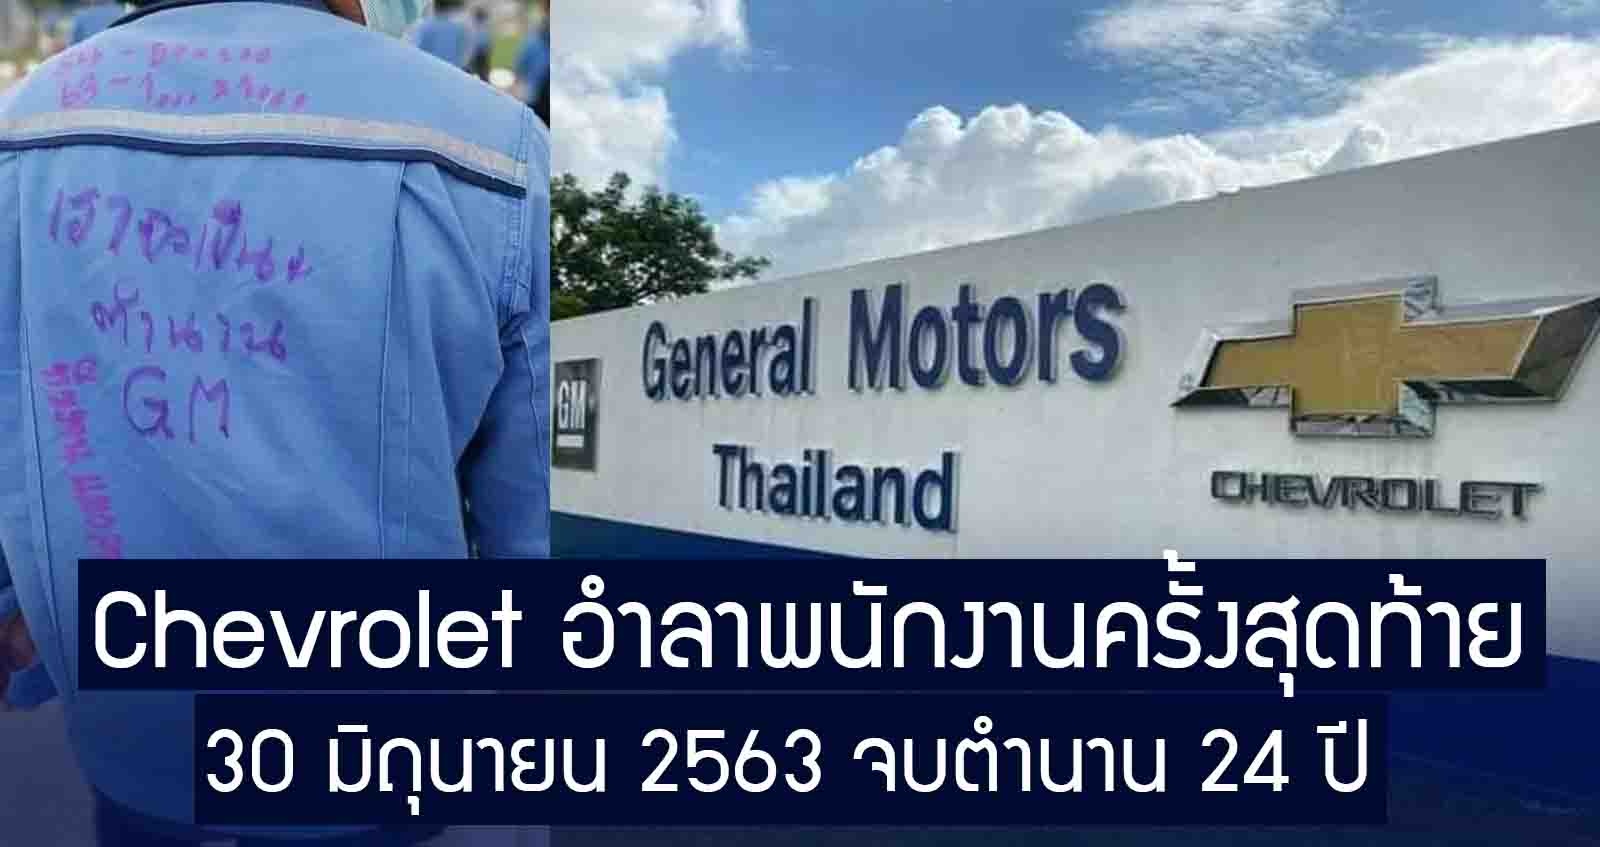 Chevrolet ประเทศไทย อำลา พนักงานครั้งสุดท้าย 30 มิ.ย.63